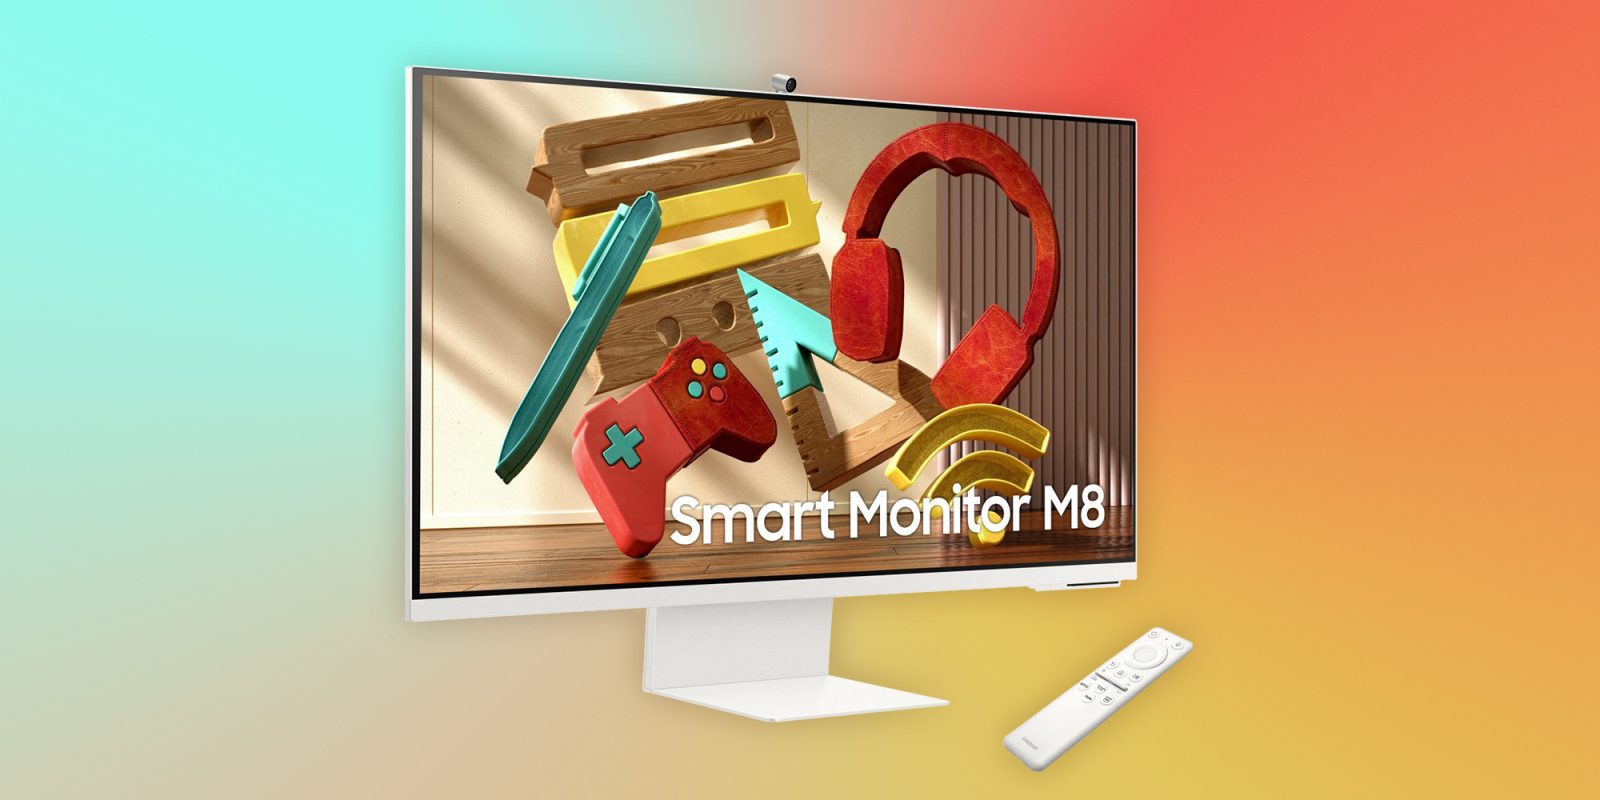 Samsung Smart Monitor M8 AirPlay, iMac-like design